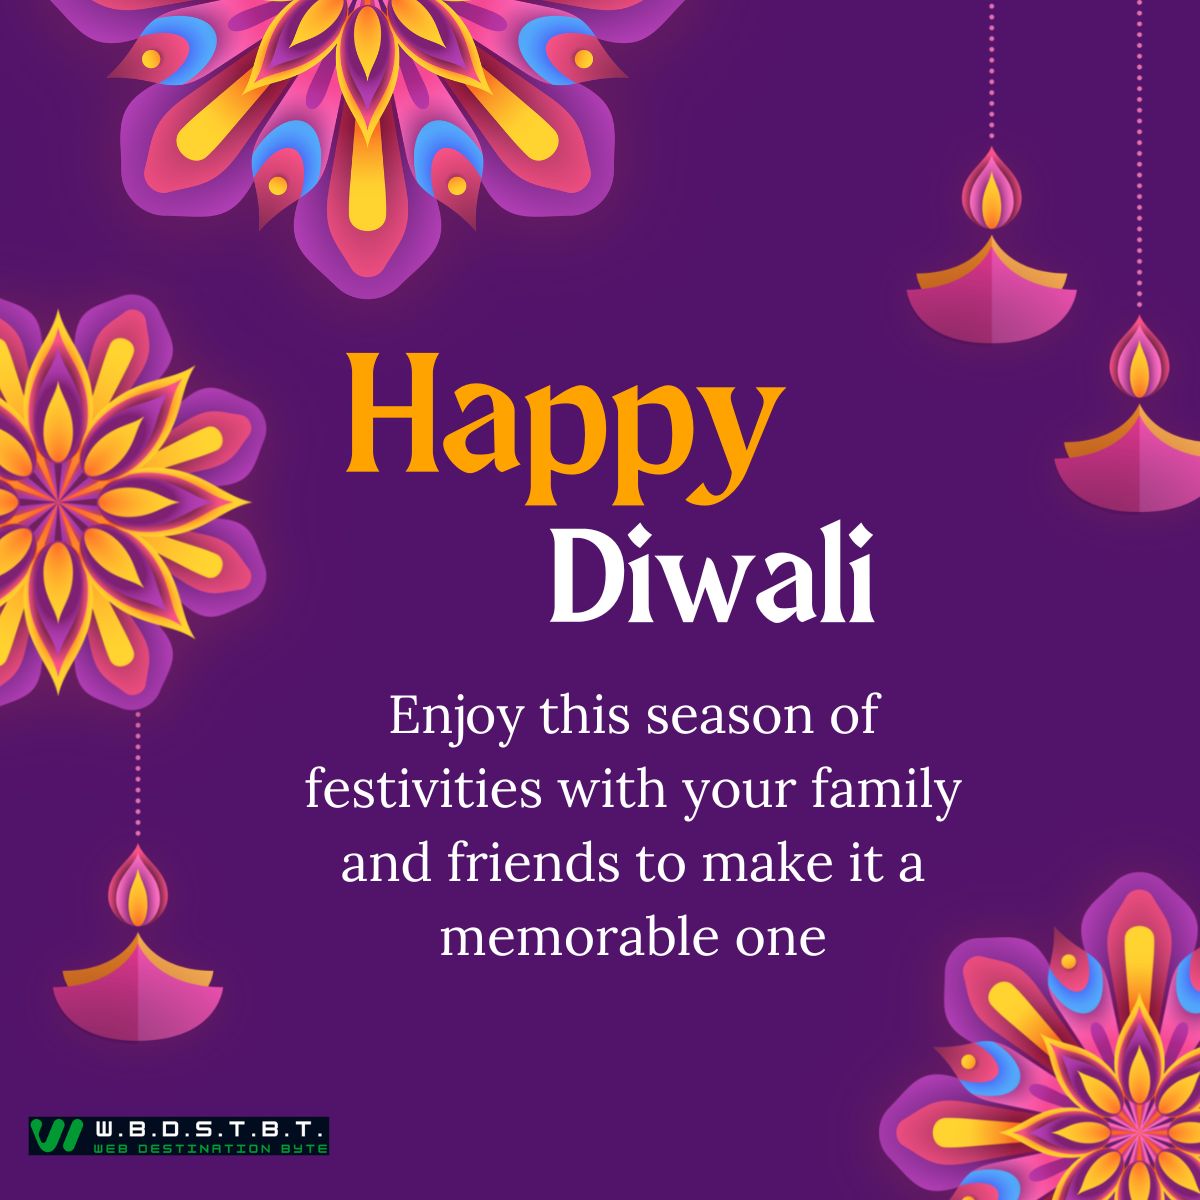 Happy wishes for Diwali